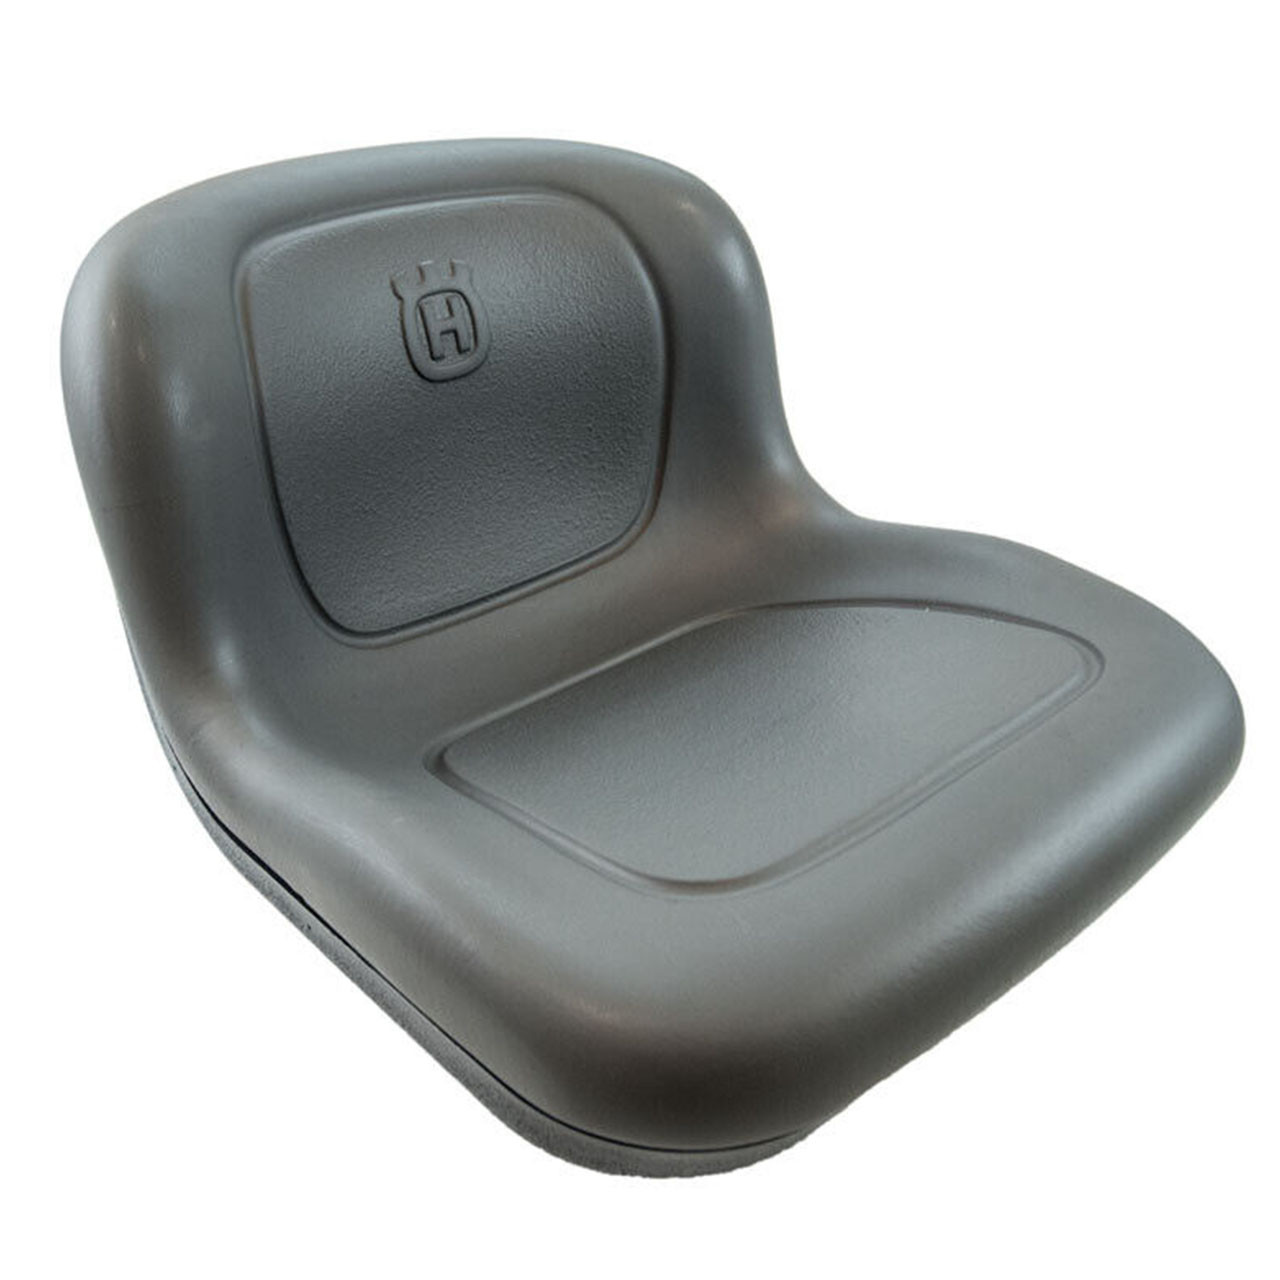 Husqvarna Seat for Zero Turn or Riding Mowers Model: 590873404